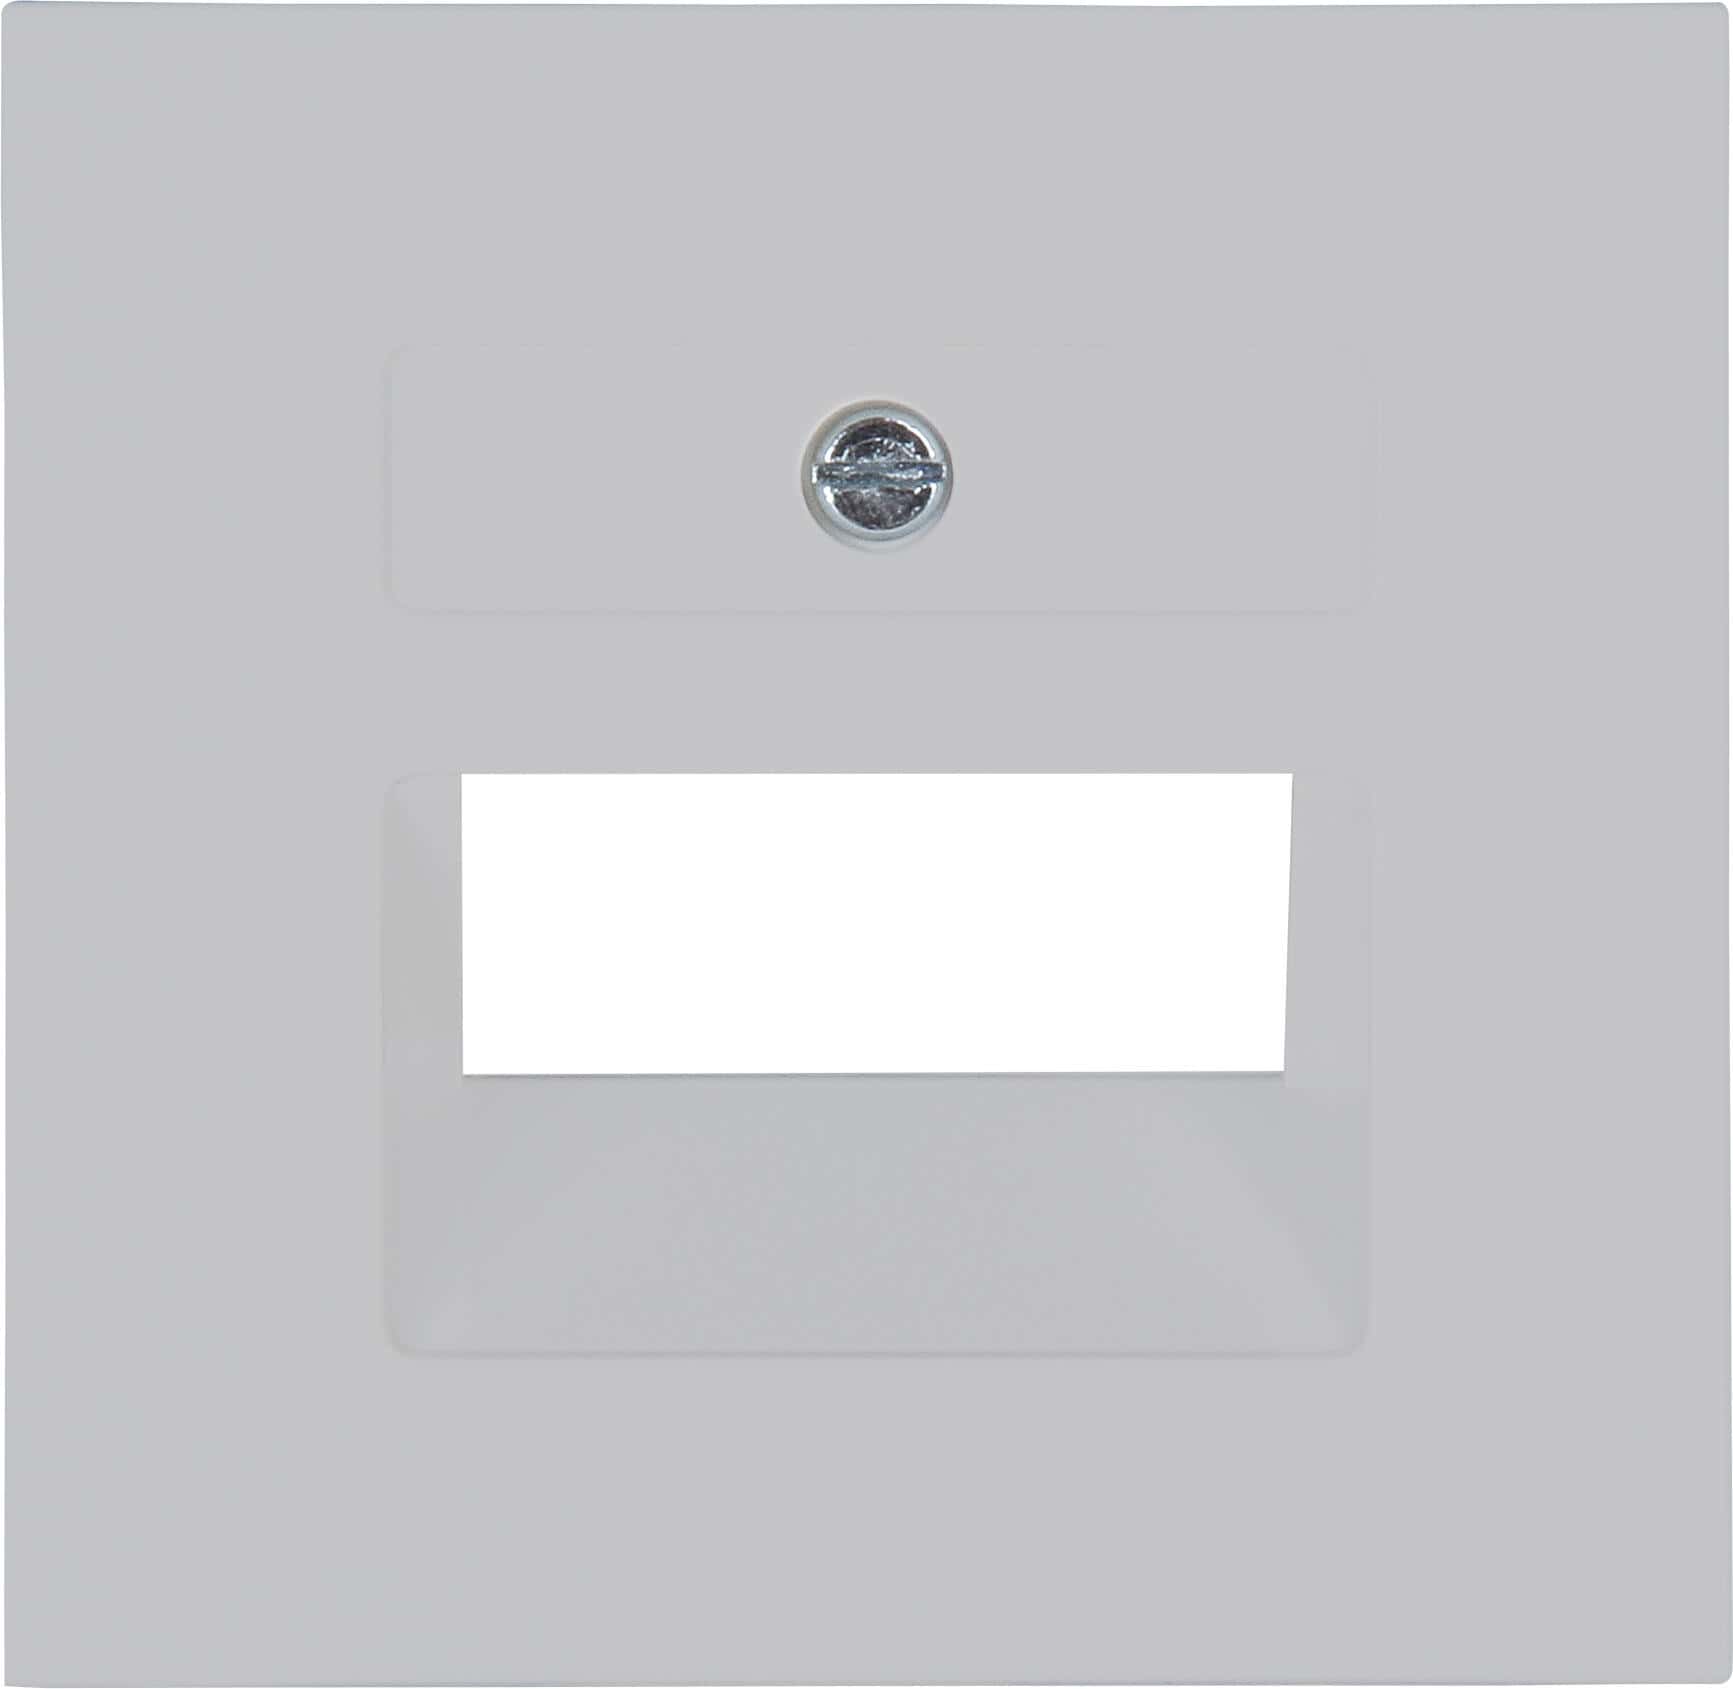 Kopp 371734005 HK07 - UAE Abdeckung, Schrägauslass, 1-2 Anschlüsse, Farbe: grau matt